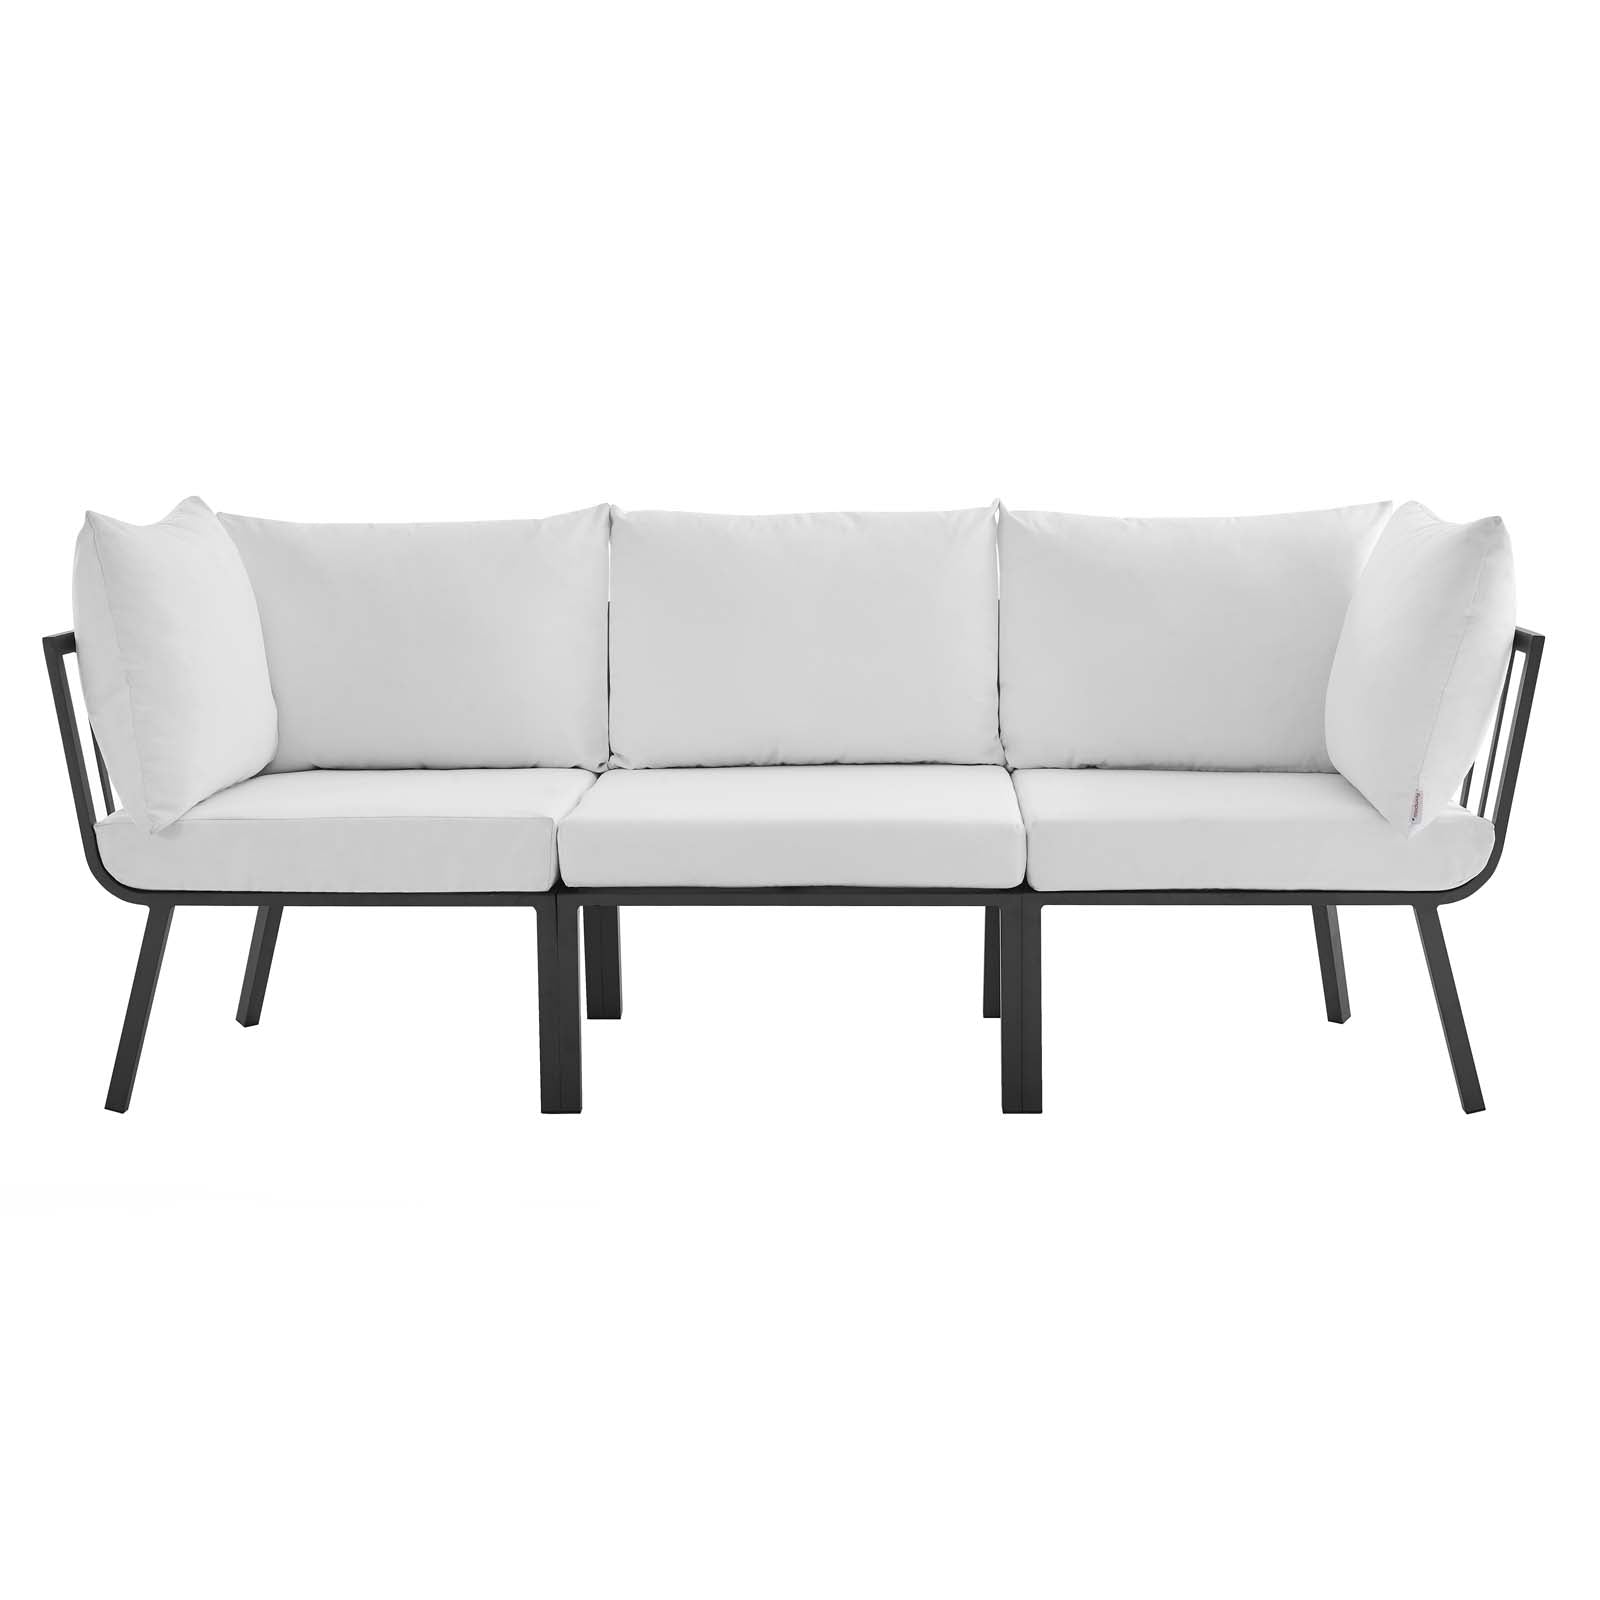 Riverside 3 Piece Outdoor Patio Aluminum Sectional Sofa Set Gray White